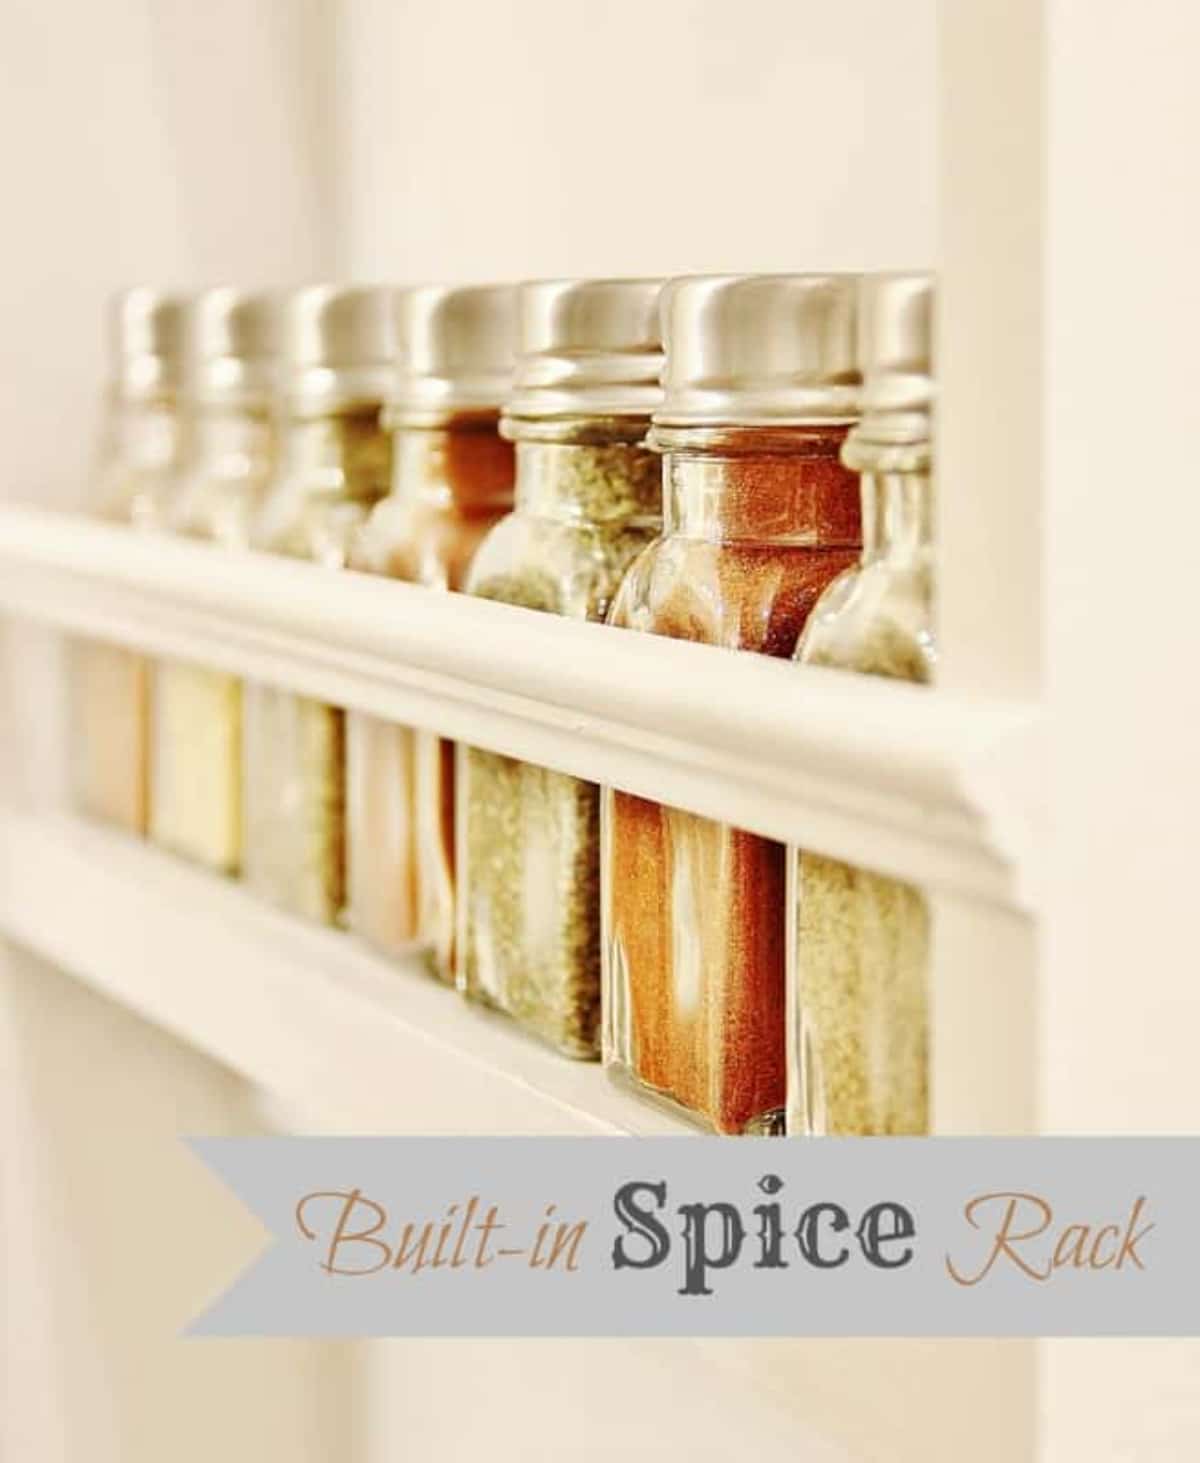 DIY Built-in Spice Rack